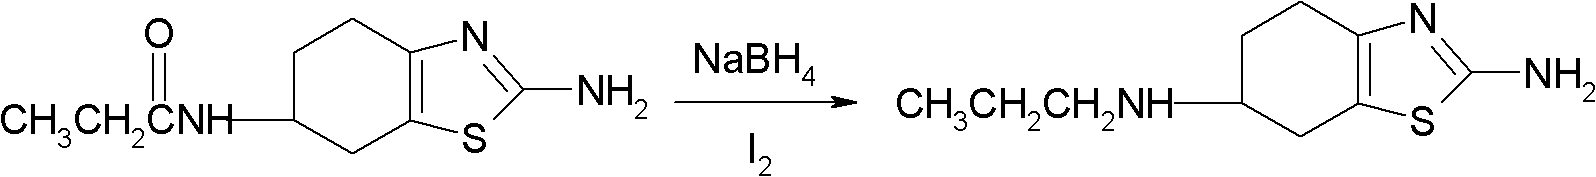 Preparation method of 2-amino-6-propylamino-4,5,6,7-tetrahydrobenzothiazole